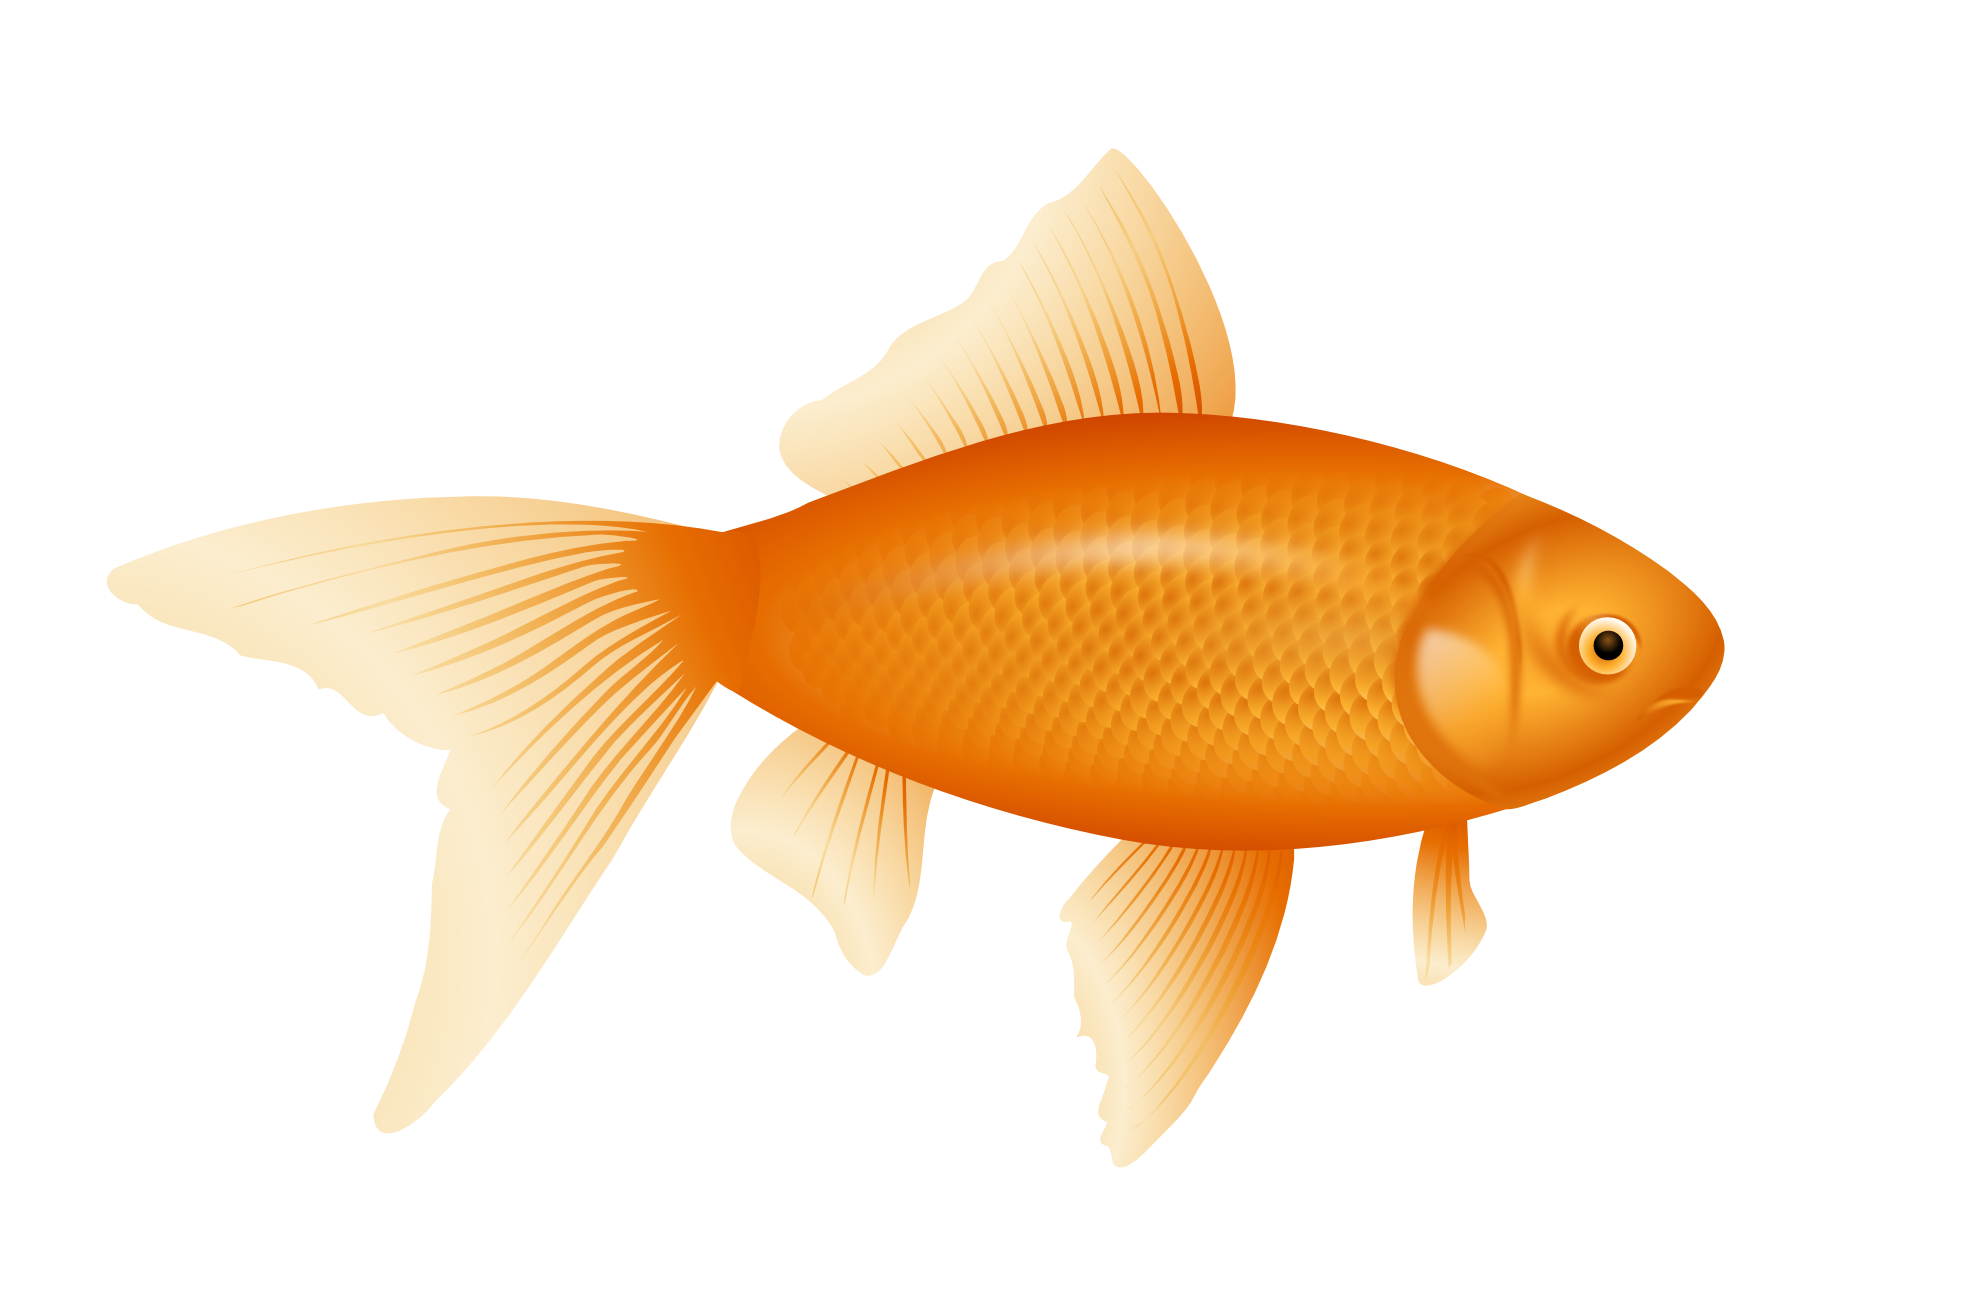 Fish,Fish,Goldfish,Fin,Feeder fish,Pomacentridae,Bony-fish,Organism,Tail,Ray-finned fish,Snapper,Fish products,Marine biology,Cyprinidae